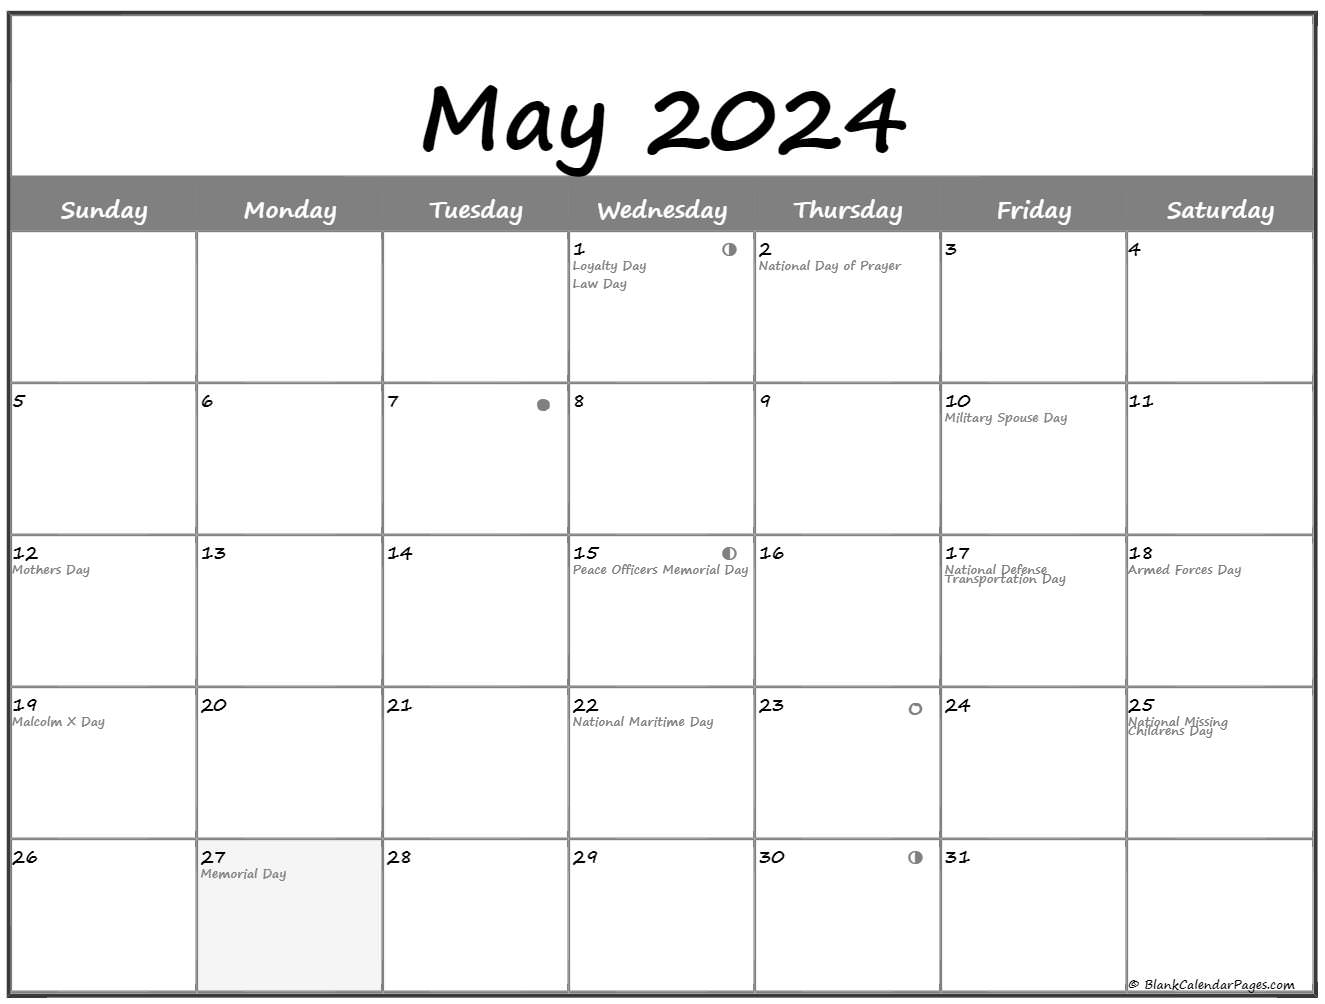 may-2023-lunar-calendar-moon-phase-calendar